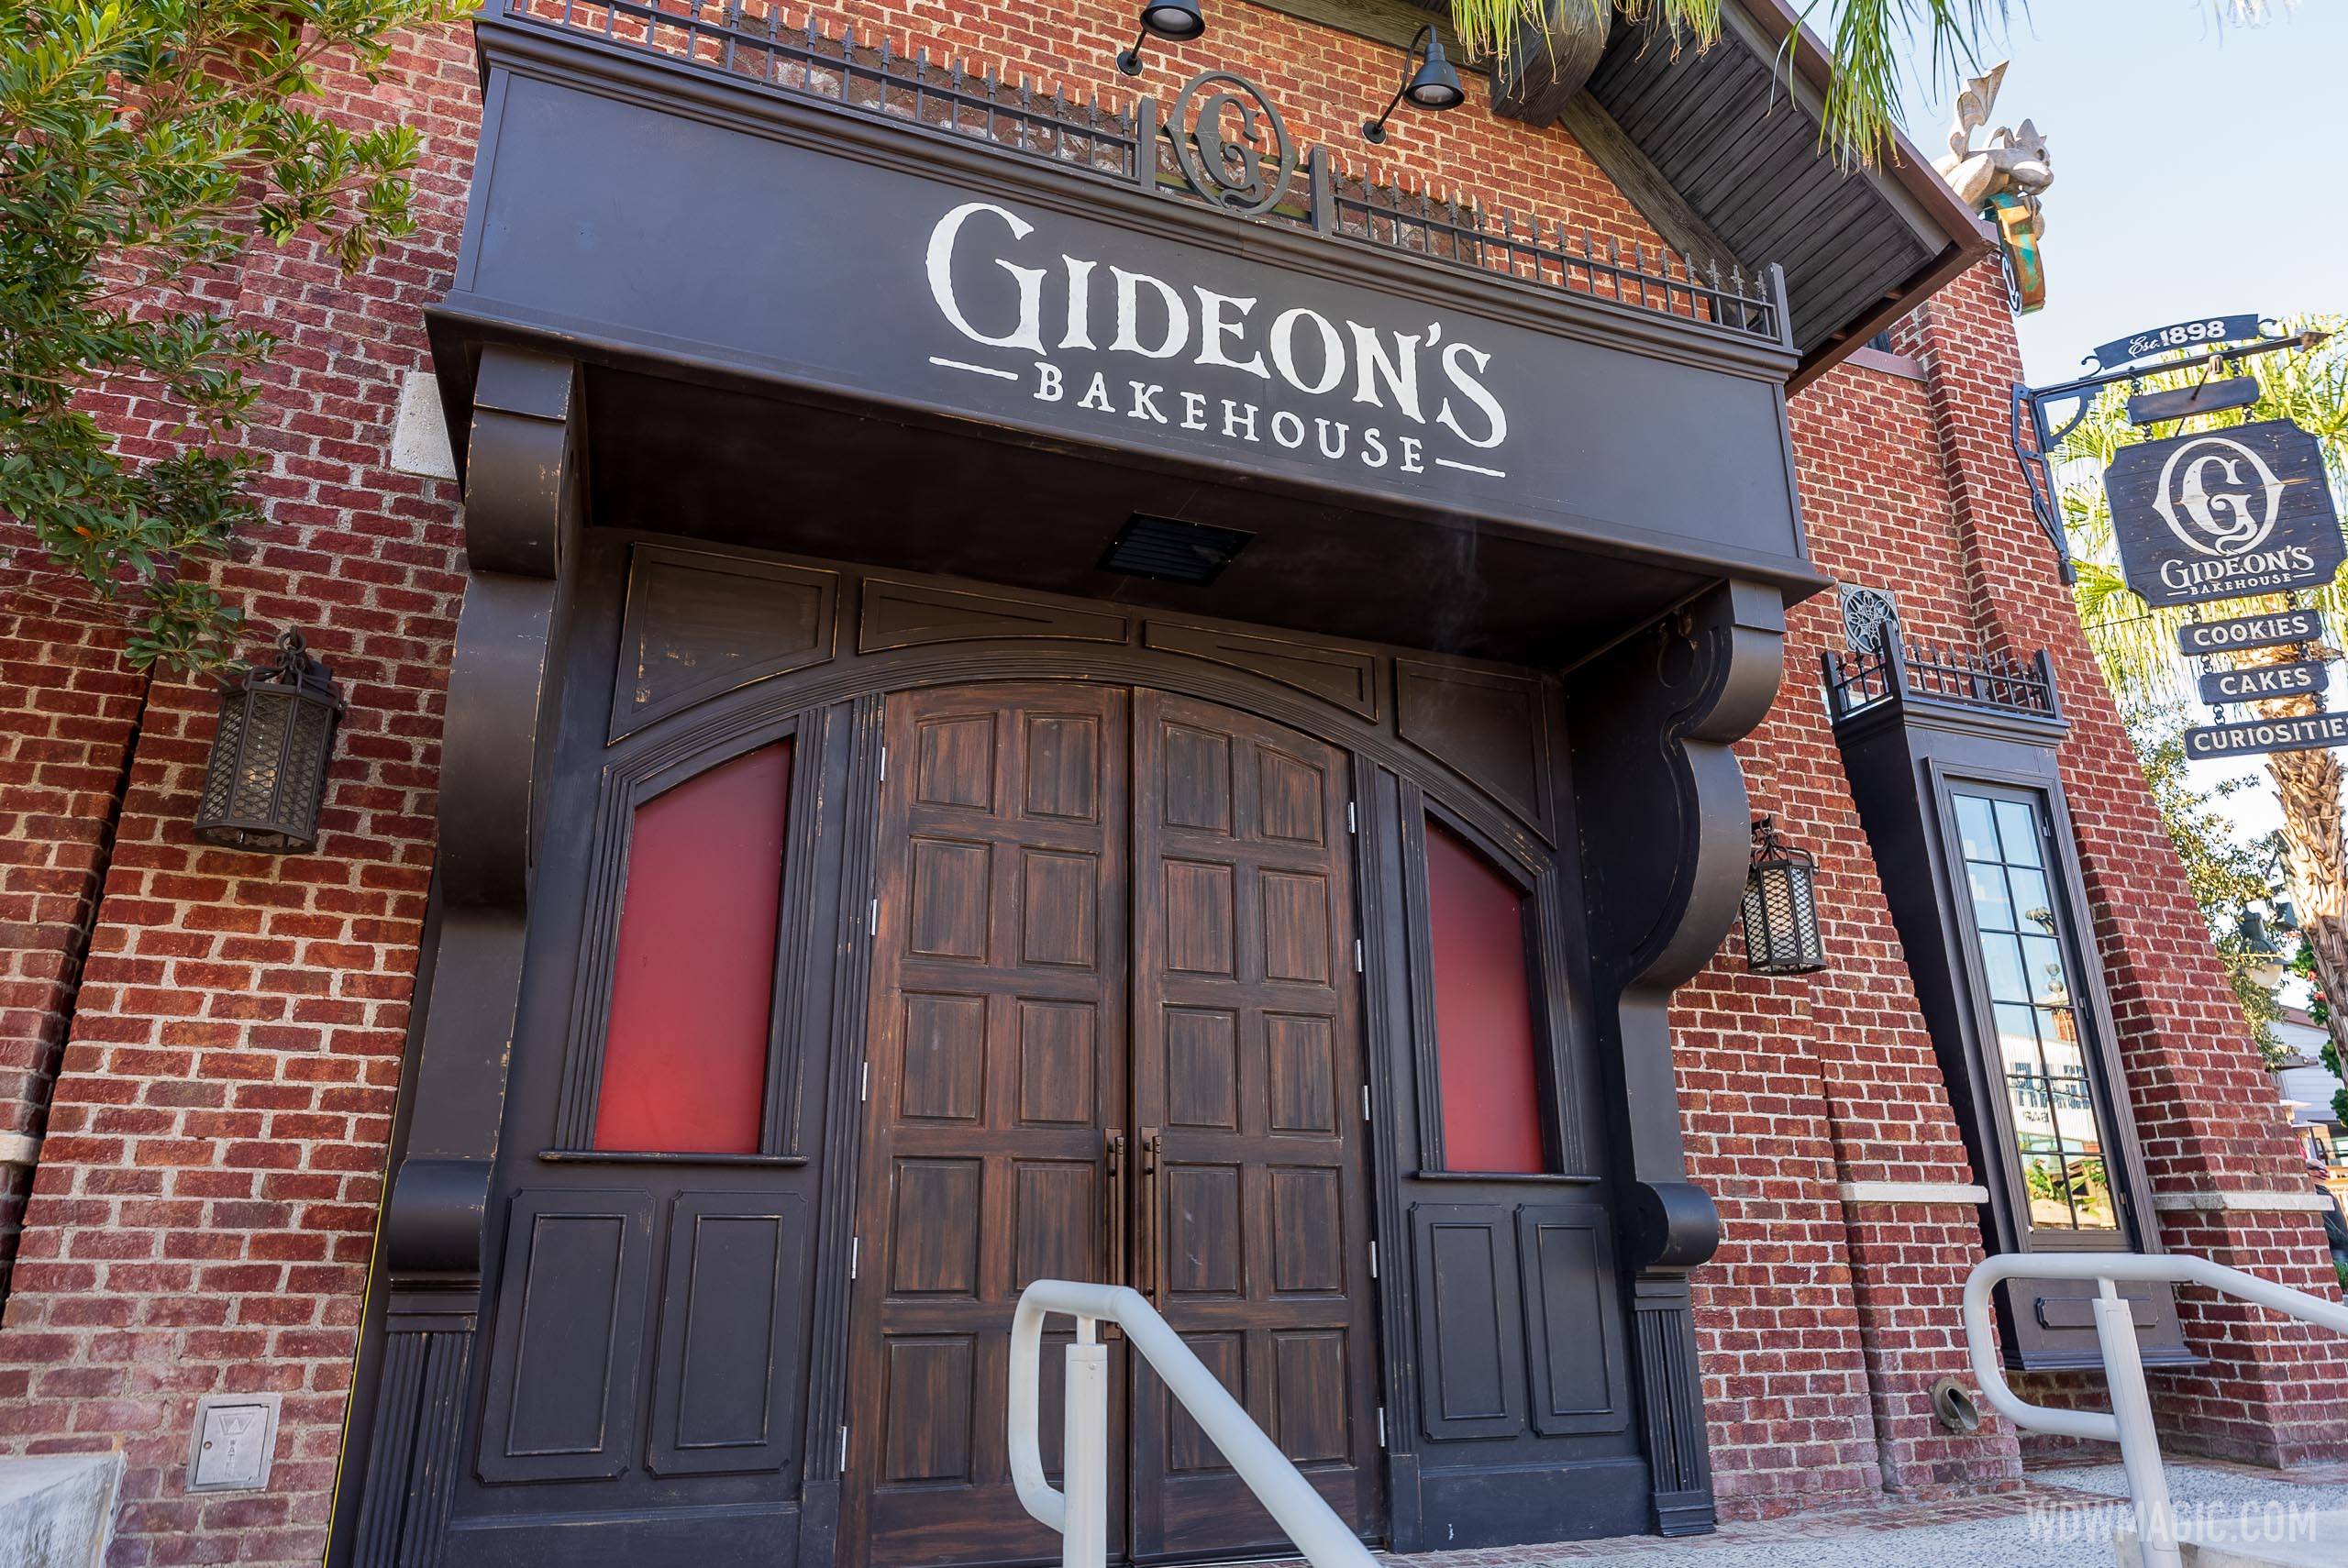 Gideon's Bakehouse 